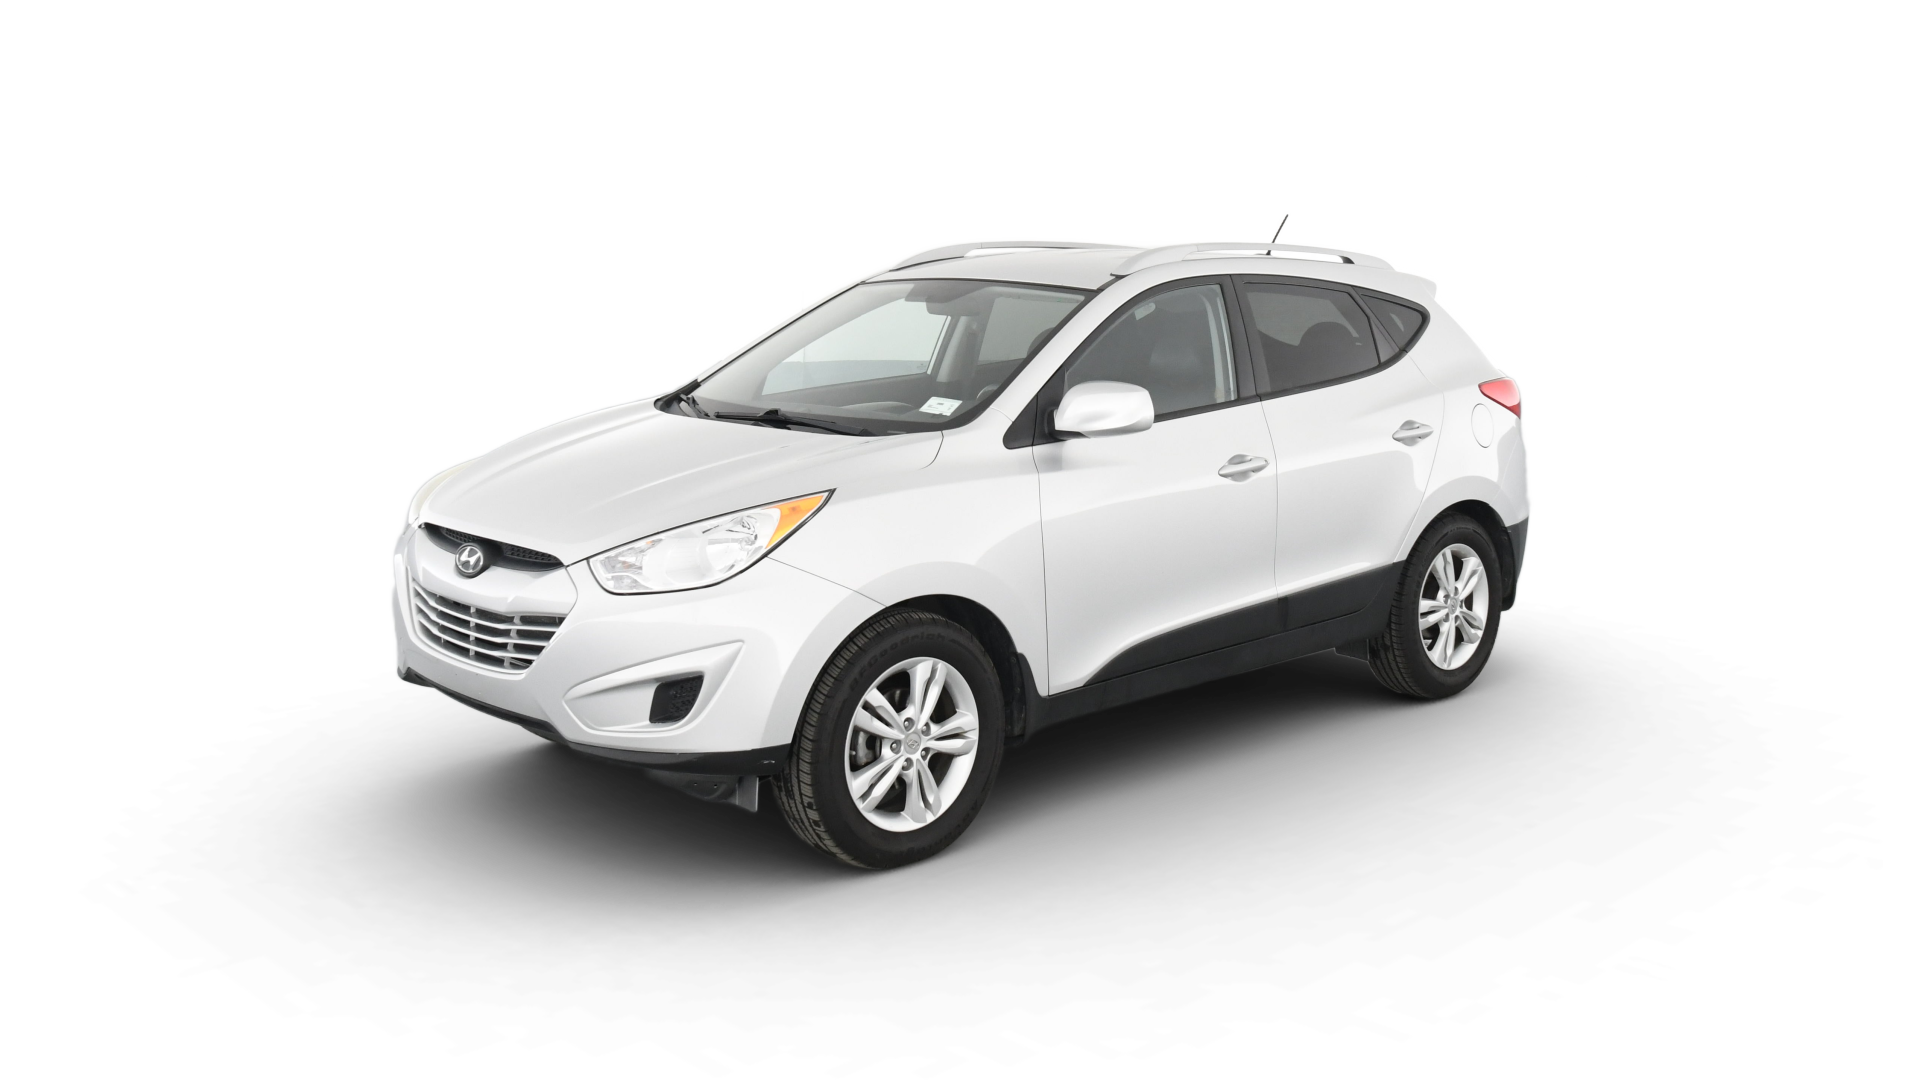 Used 2011 Hyundai Tucson For Sale Online | Carvana